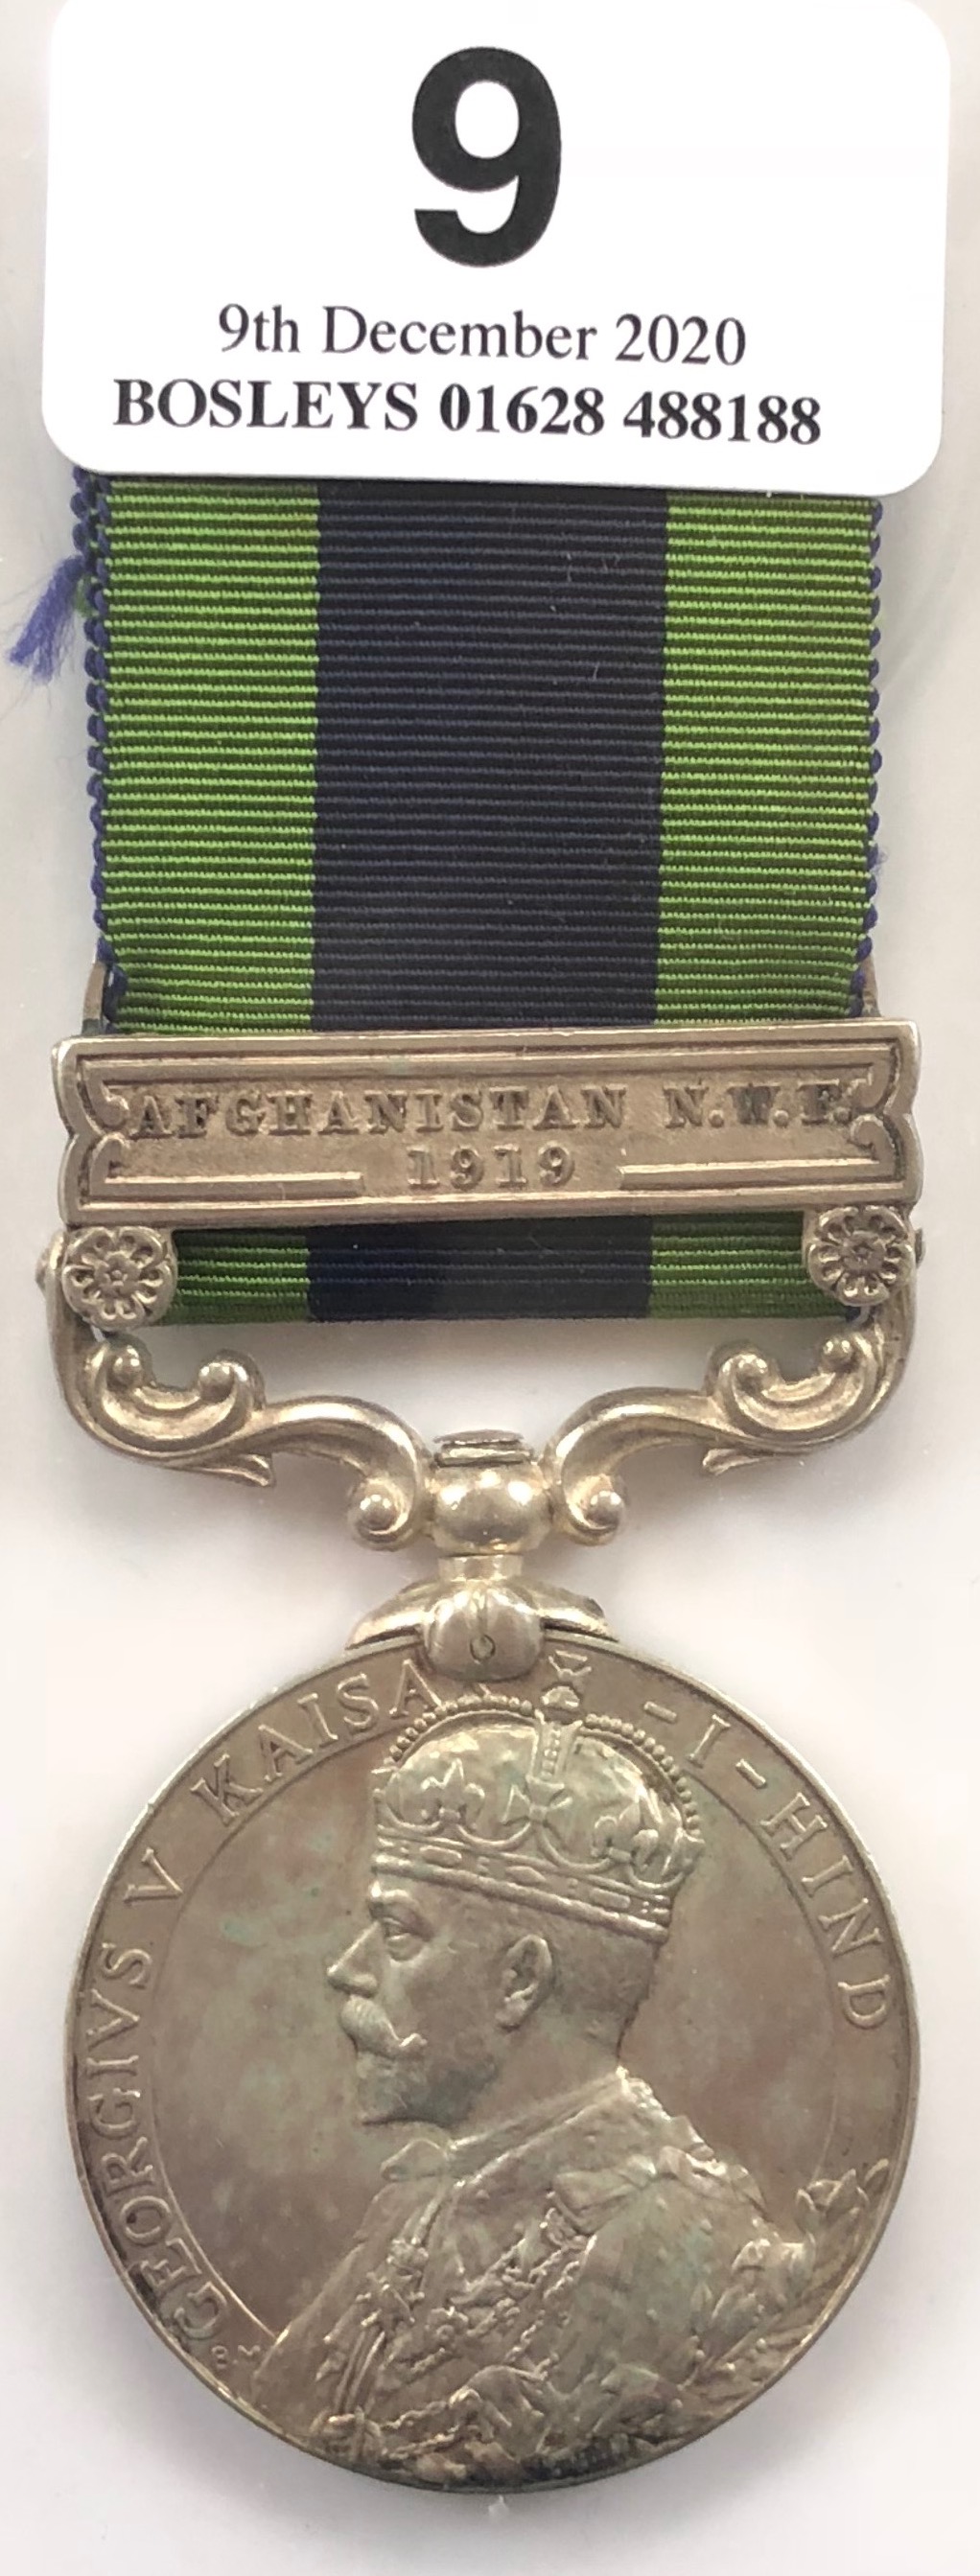 Machine Gun Corps India General Service Medal, clasp “Afganistan NWF 1919”